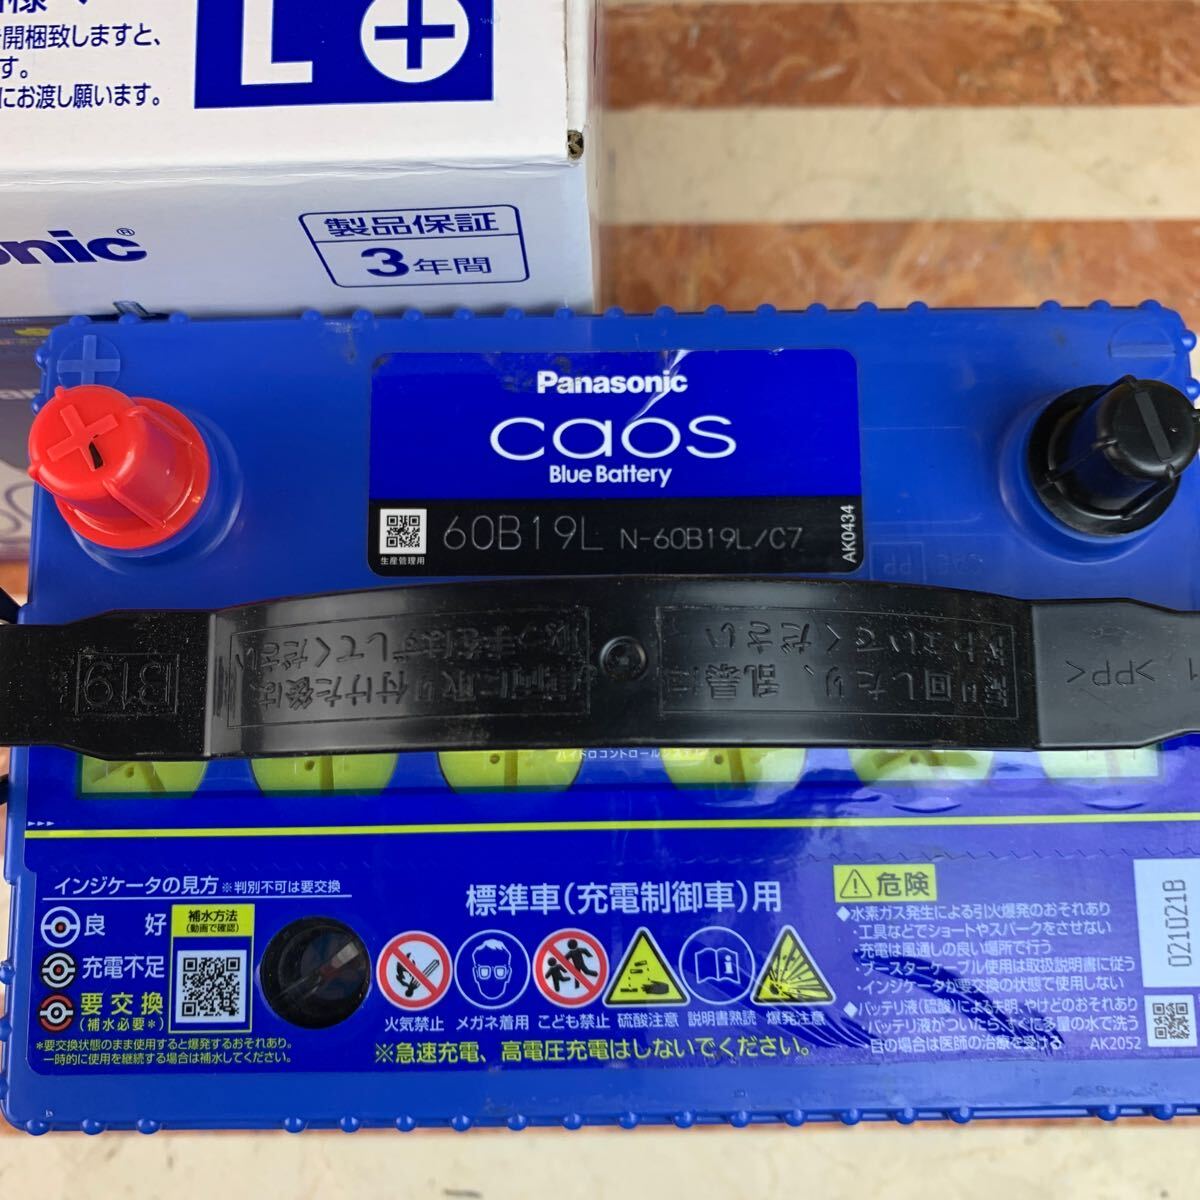 Panasonic パナソニック CAOS カオス60B19L /C7 370CCA 廃棄カーバッテリー無料回収 パルス充電済み バッテリーチェッカー有料にて同梱の画像2